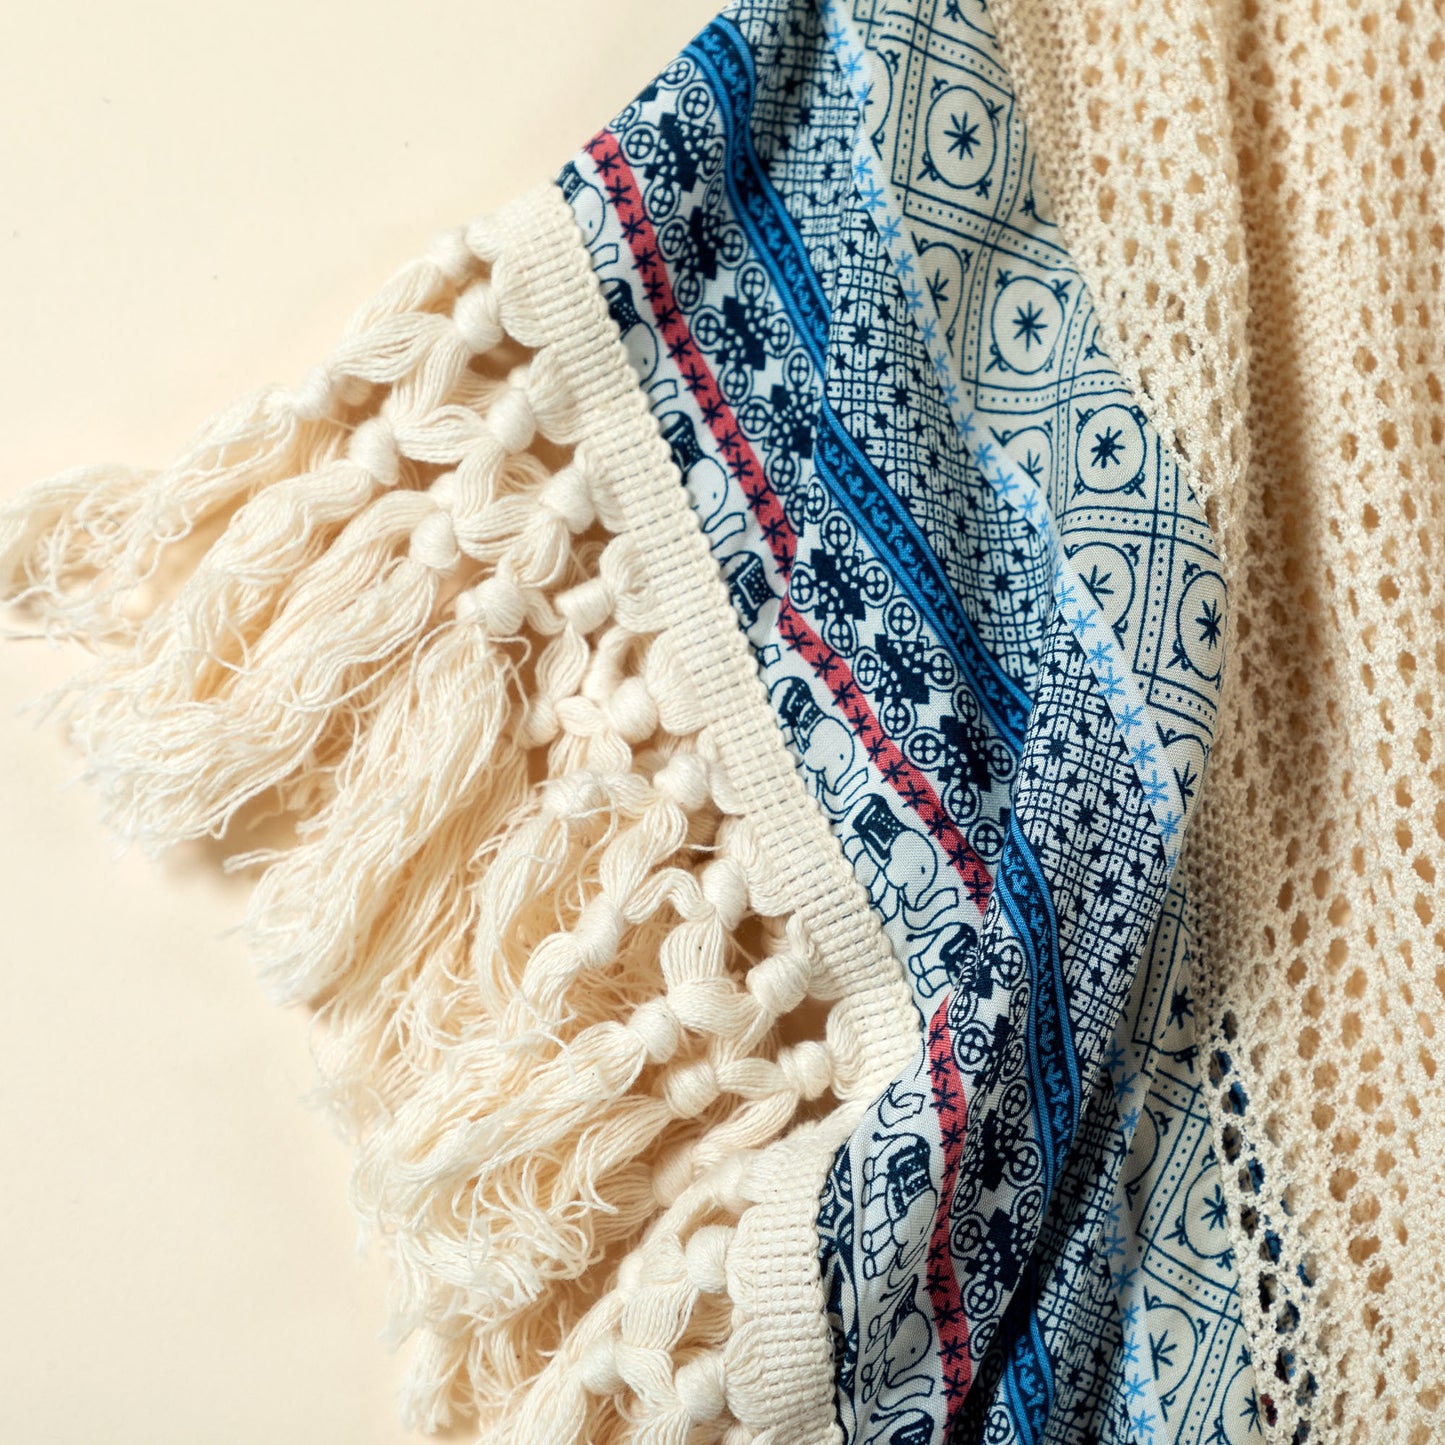 Open Weave Crochet Top with Fringe